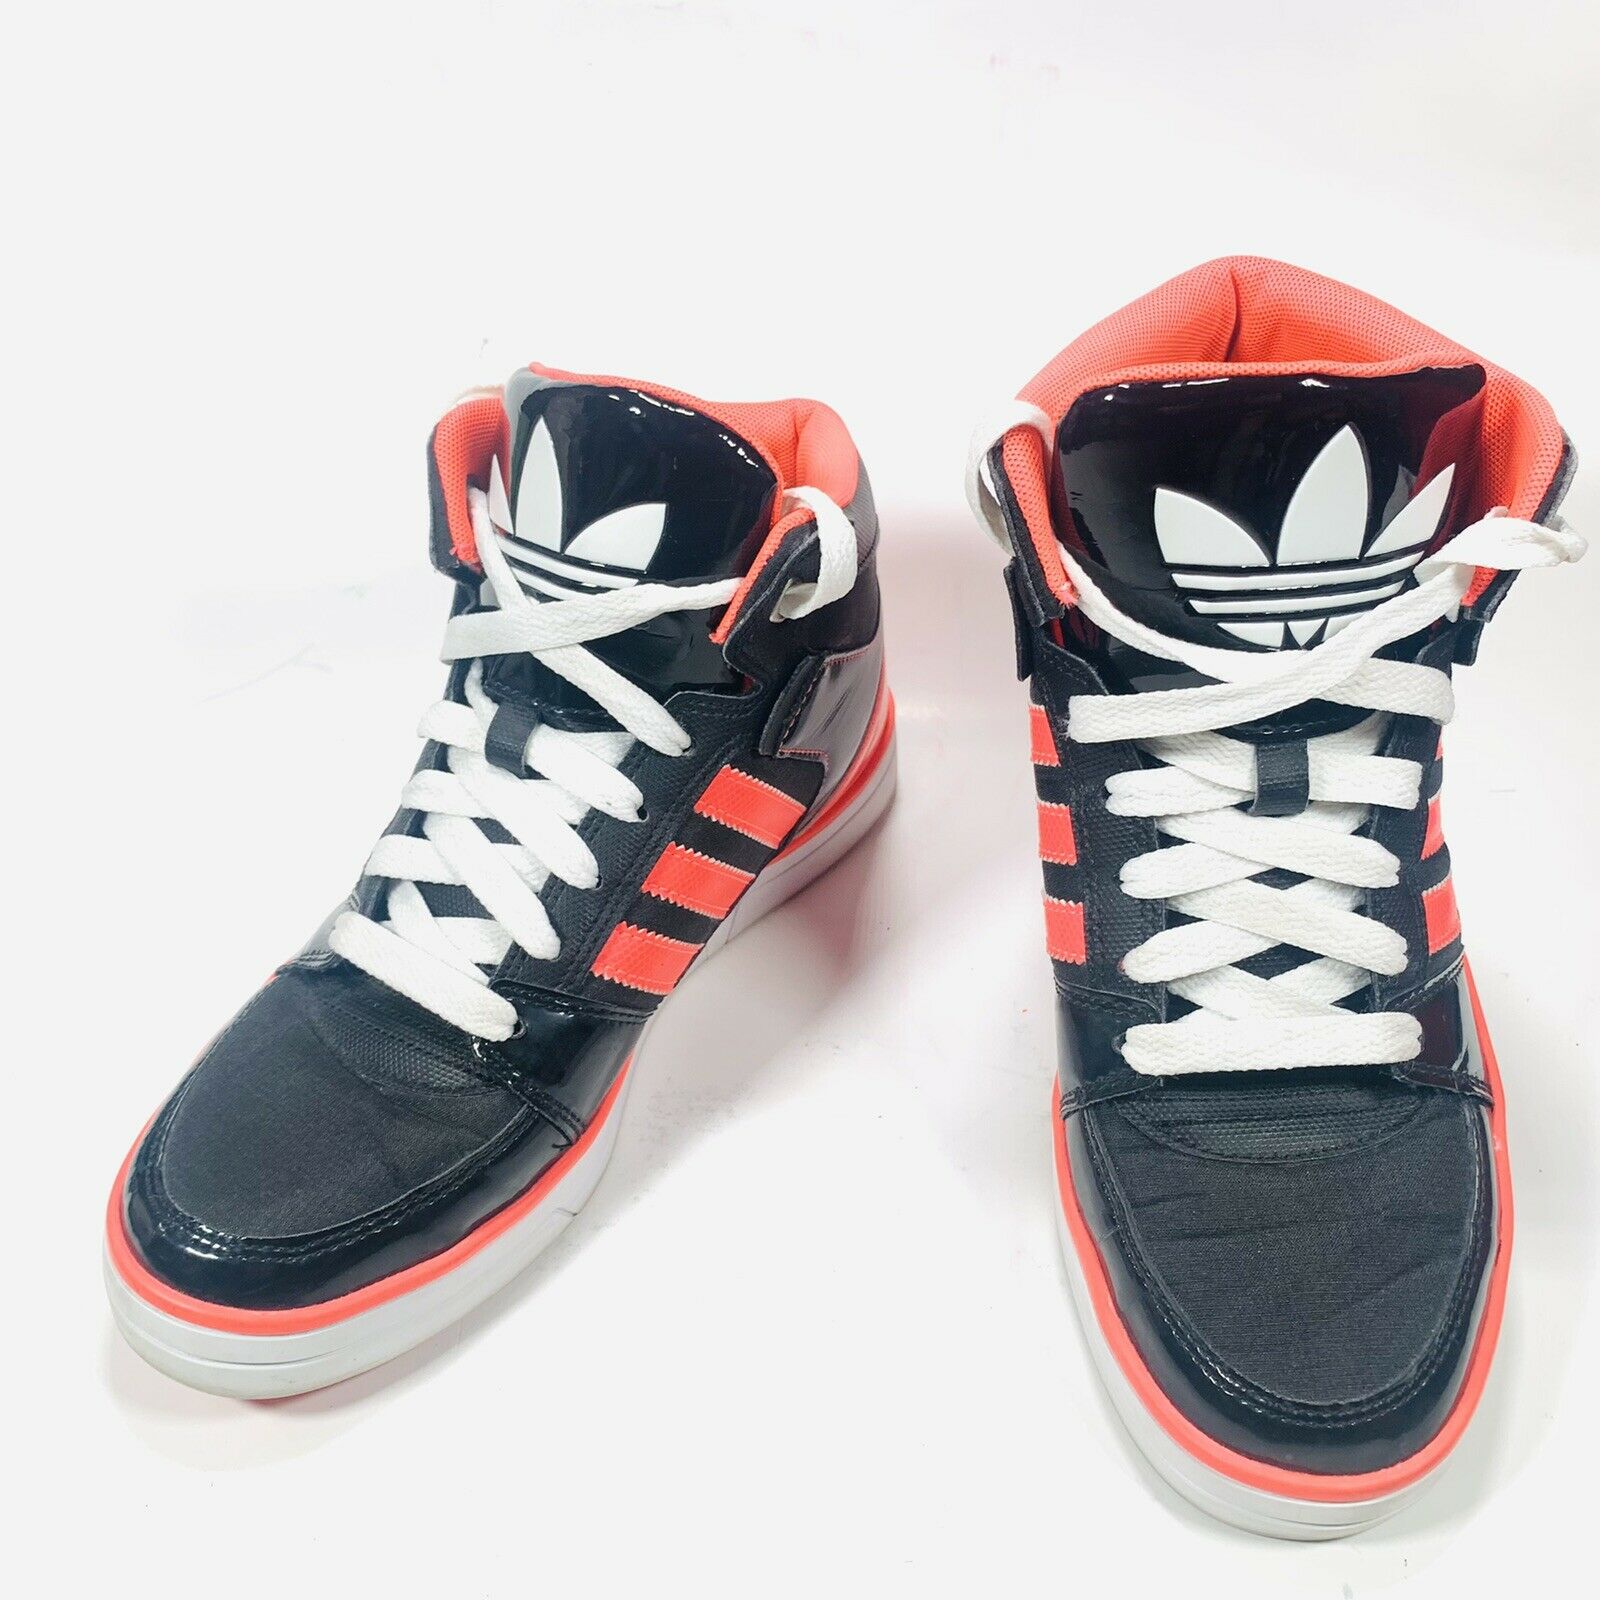 Adidas Originals Hardcourt Hi Juniors Shoes Coral Leather Size 6.5 EUC ~ G67498